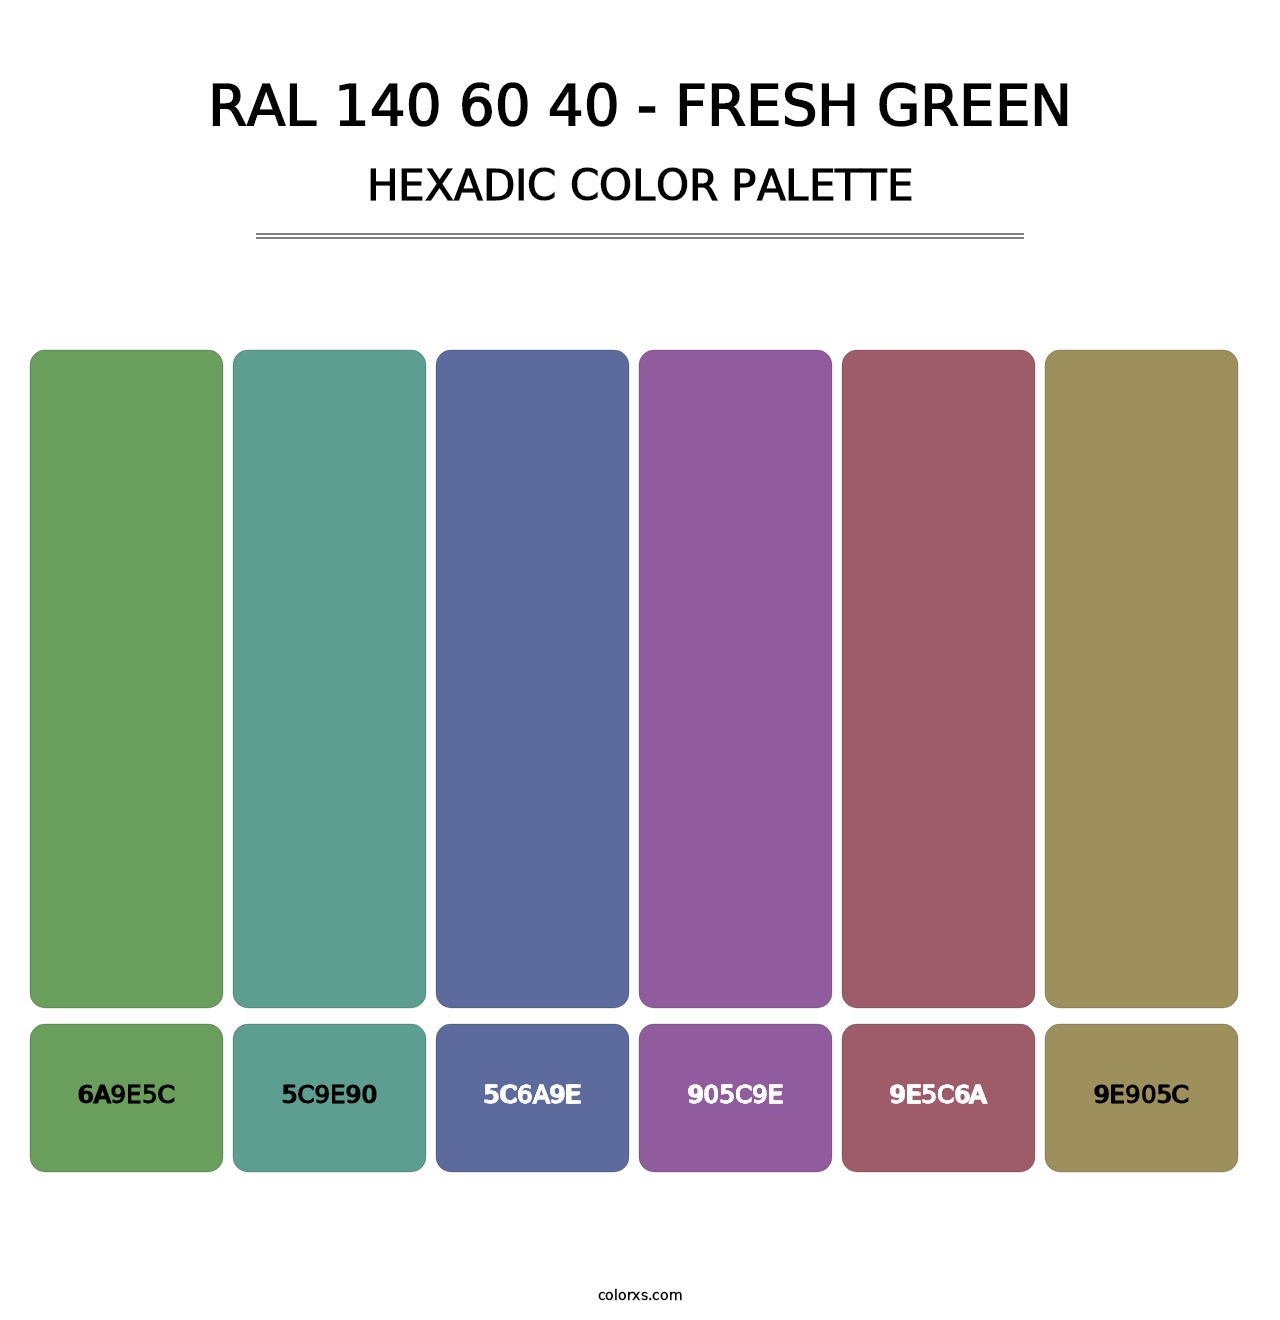 RAL 140 60 40 - Fresh Green - Hexadic Color Palette